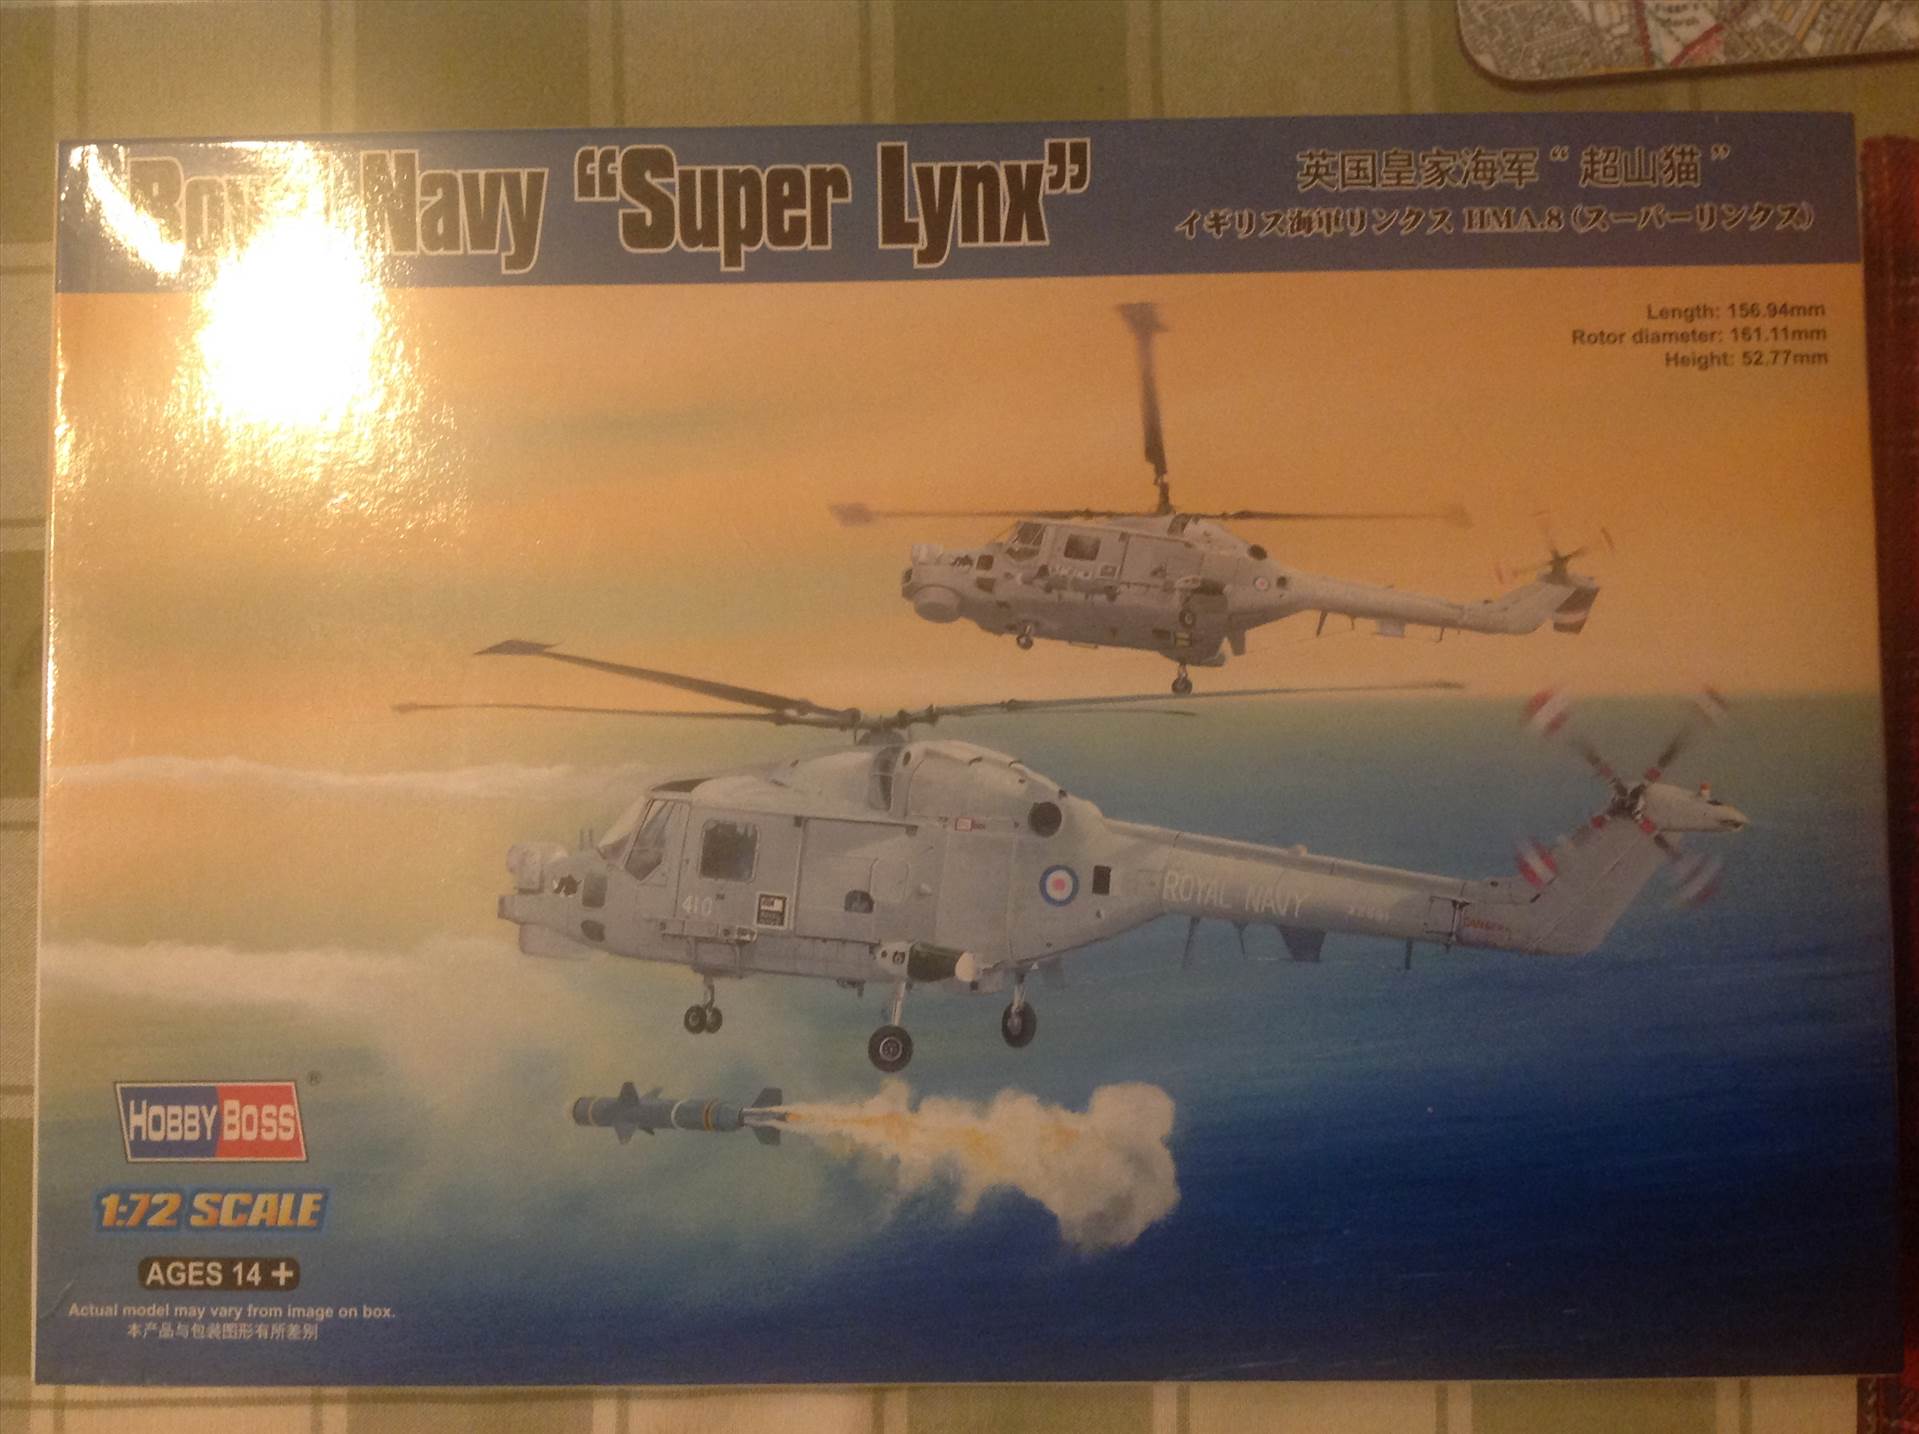 Westland Lynx Hma 8 The Black Cats 2 Helicopter Autogyro Stovl Gb Britmodeller Com